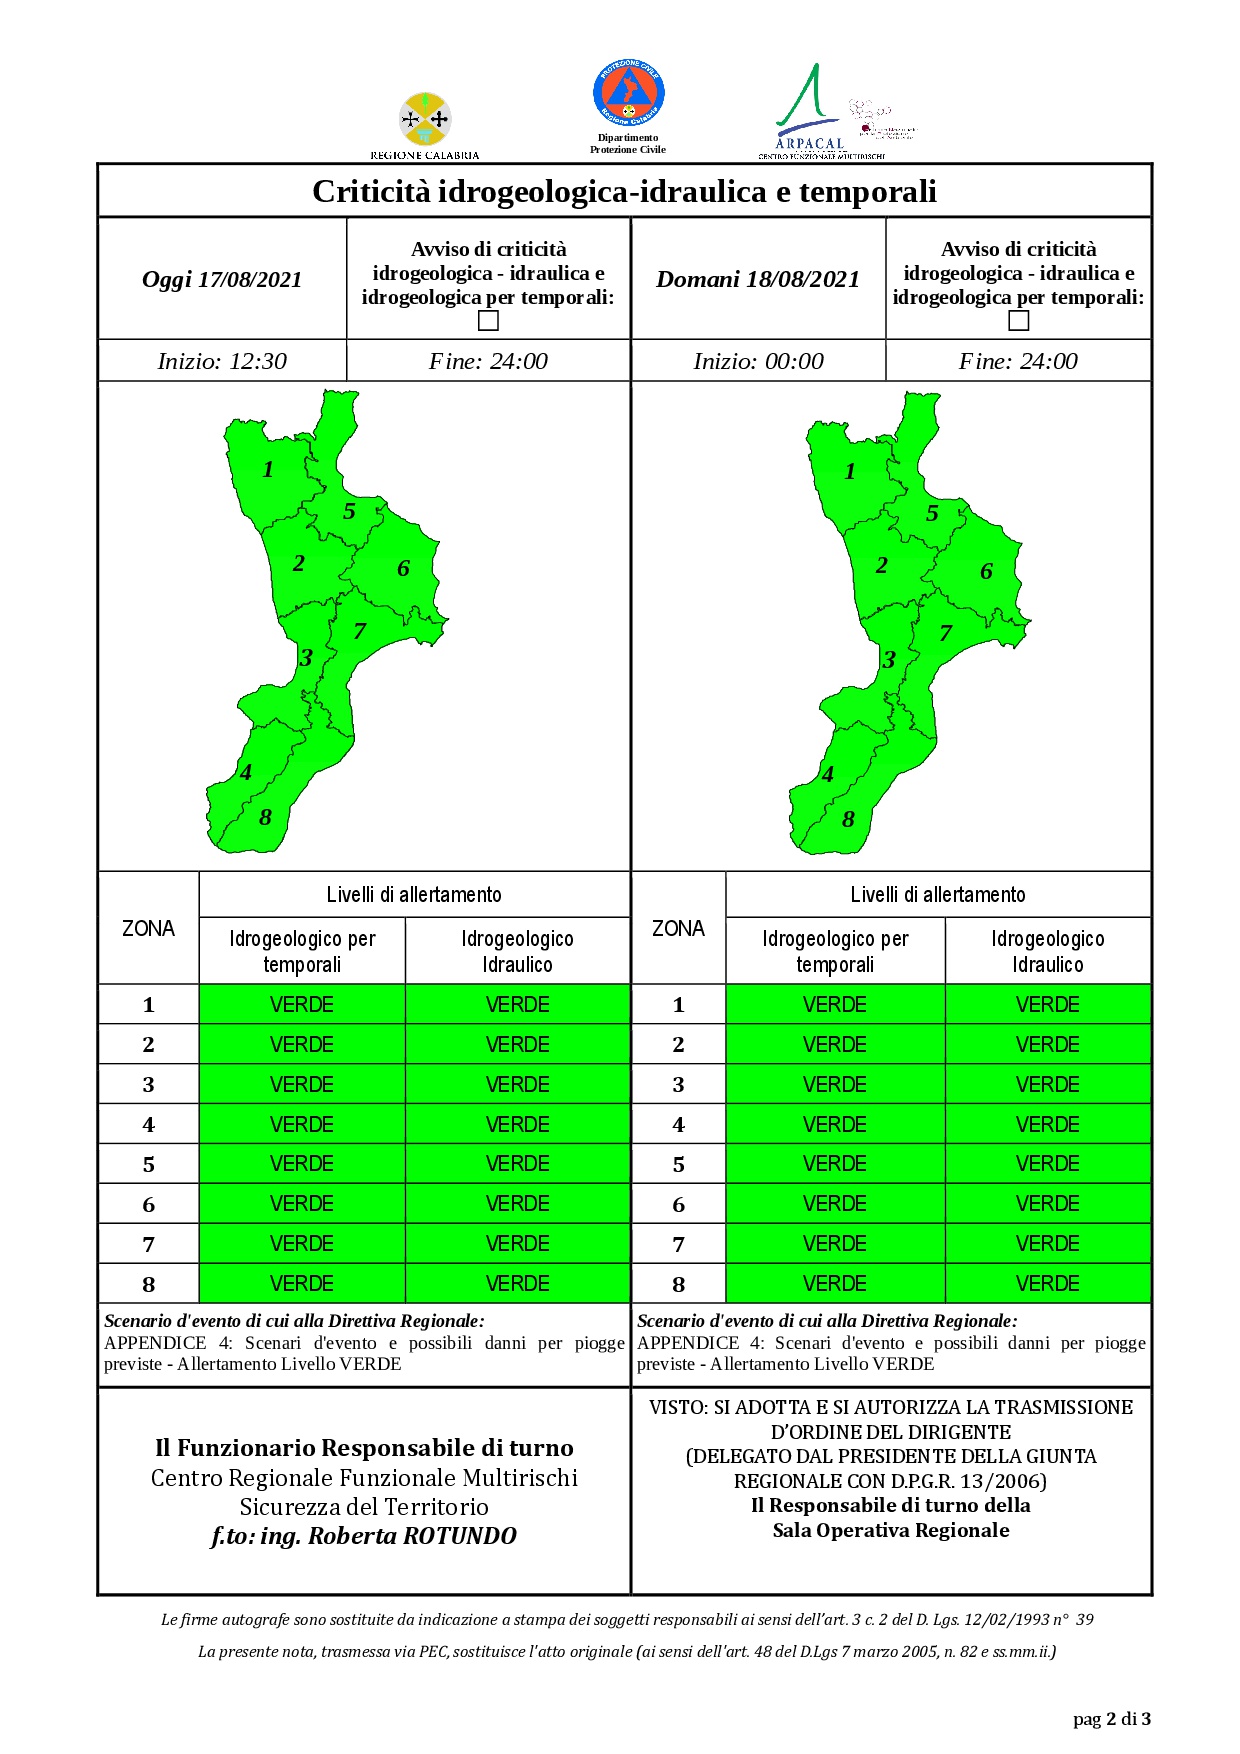 Criticità idrogeologica-idraulica e temporali in Calabria 17-08-2021